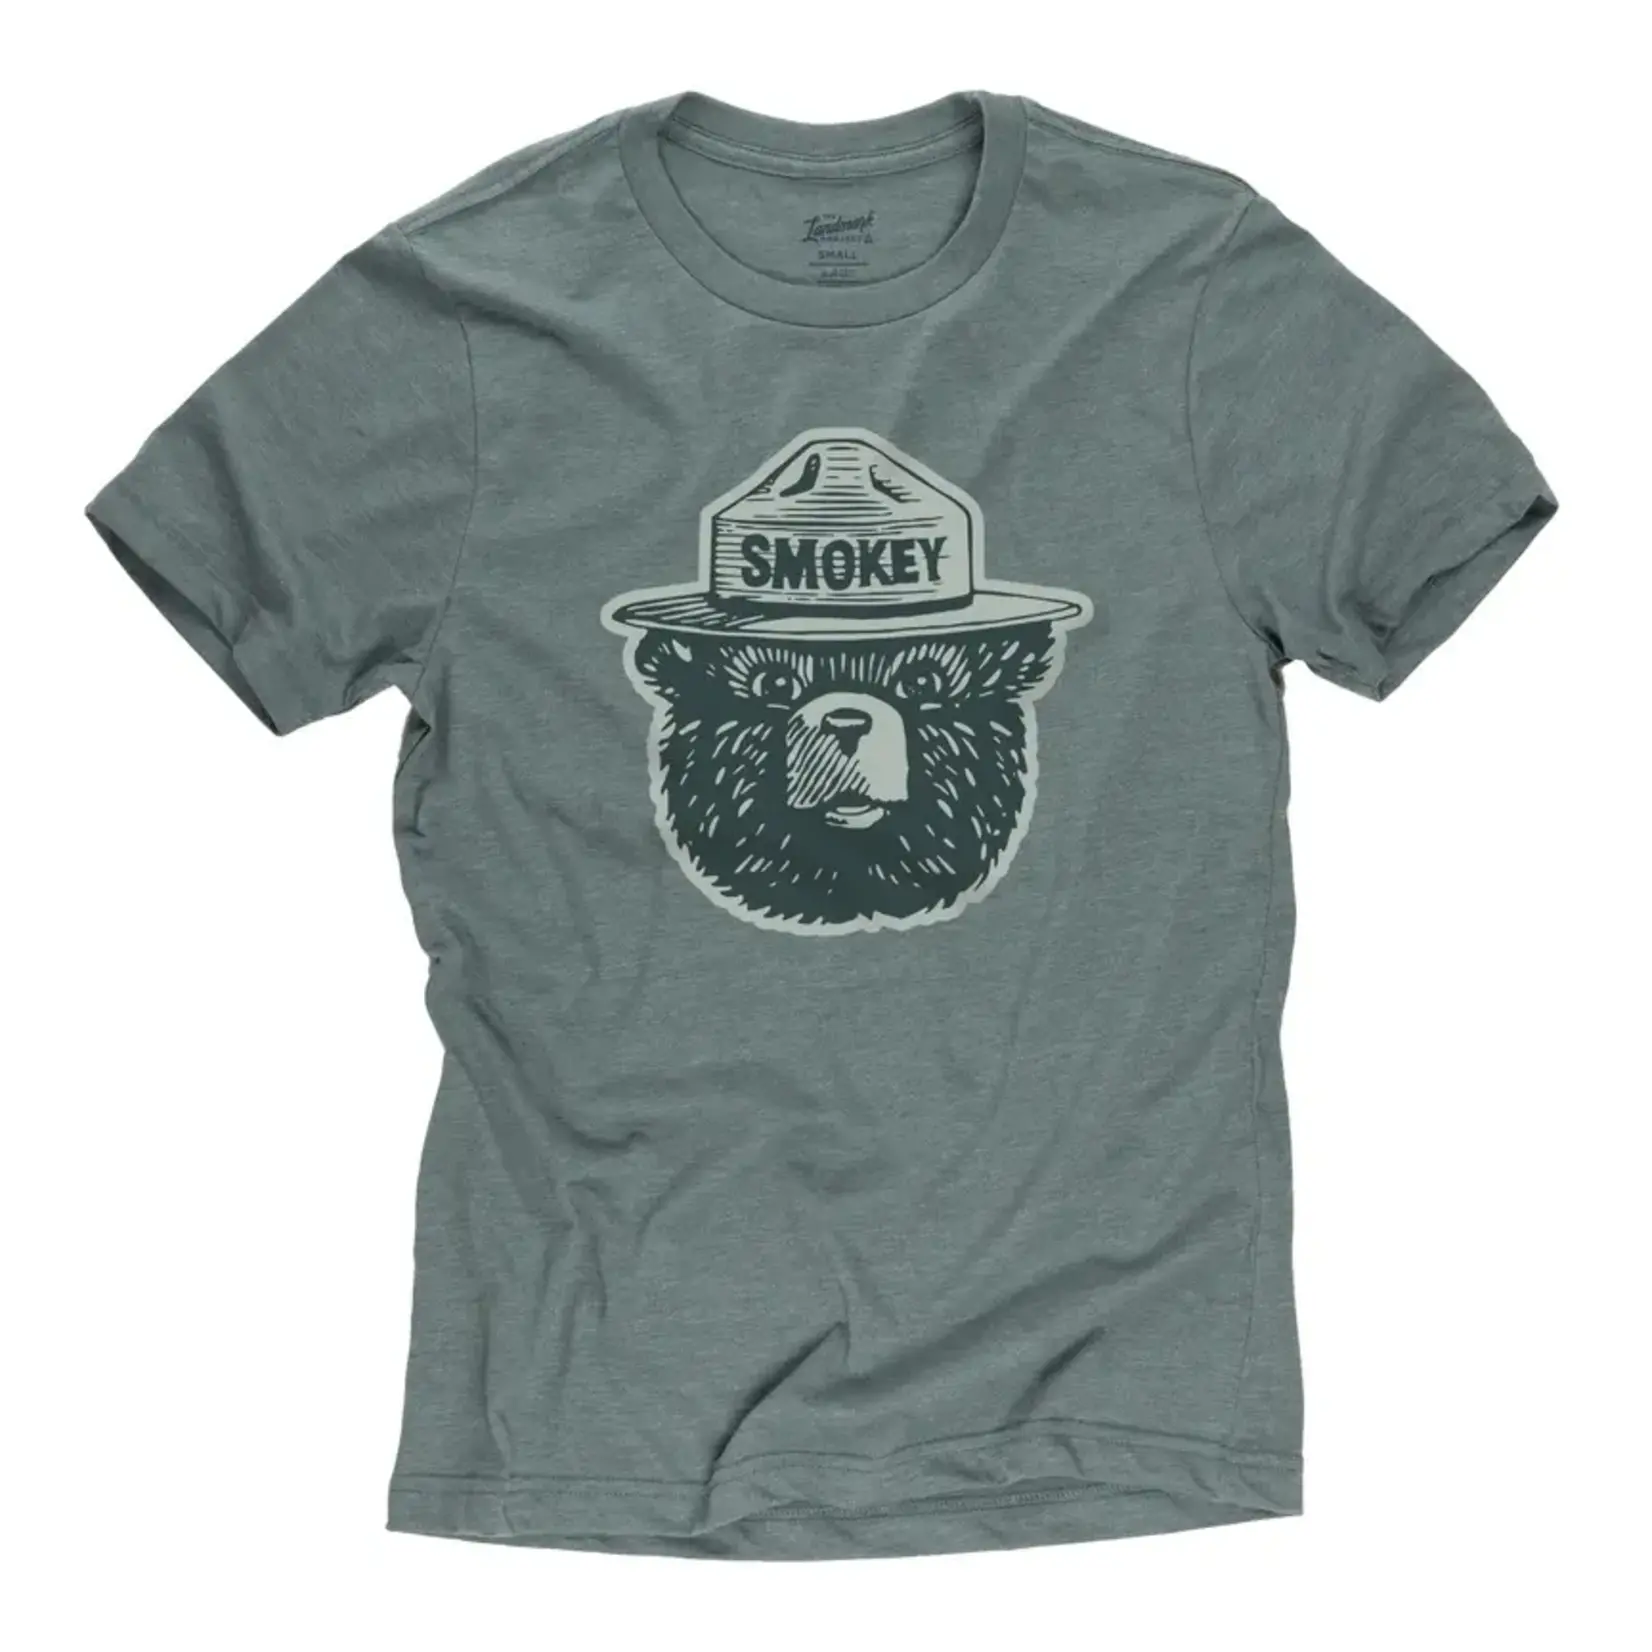 The Landmark Project Smokey T-Shirt